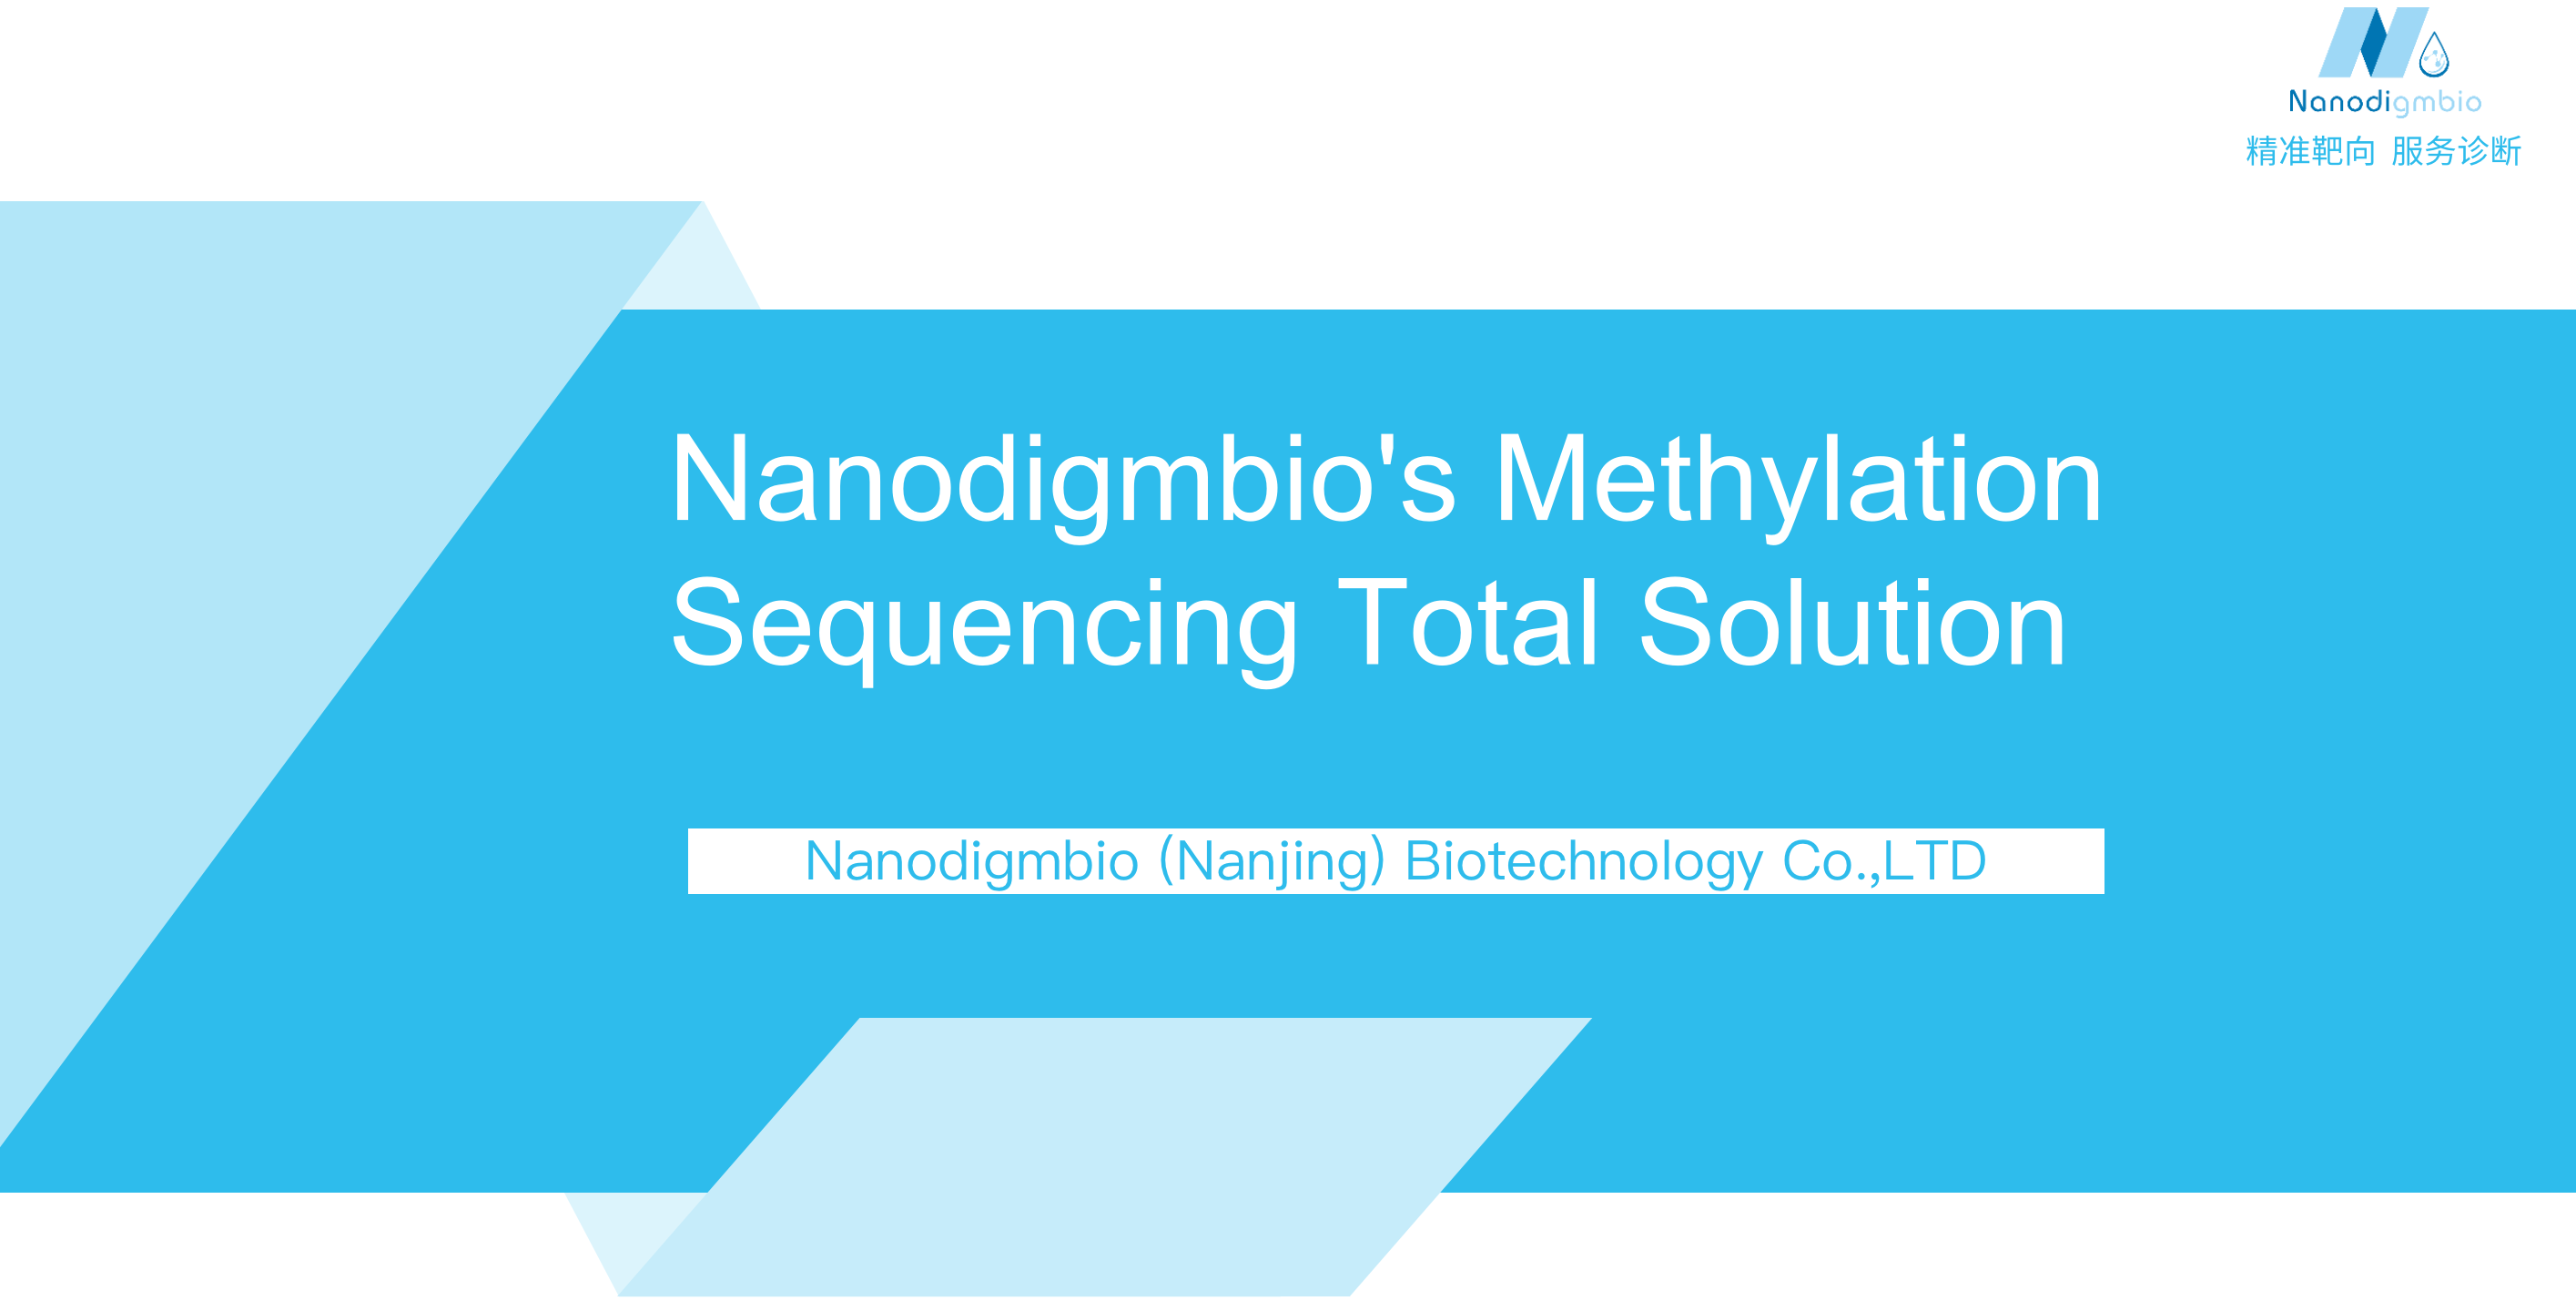 Nanodigmbio's Methylation Sequencing Total Solution